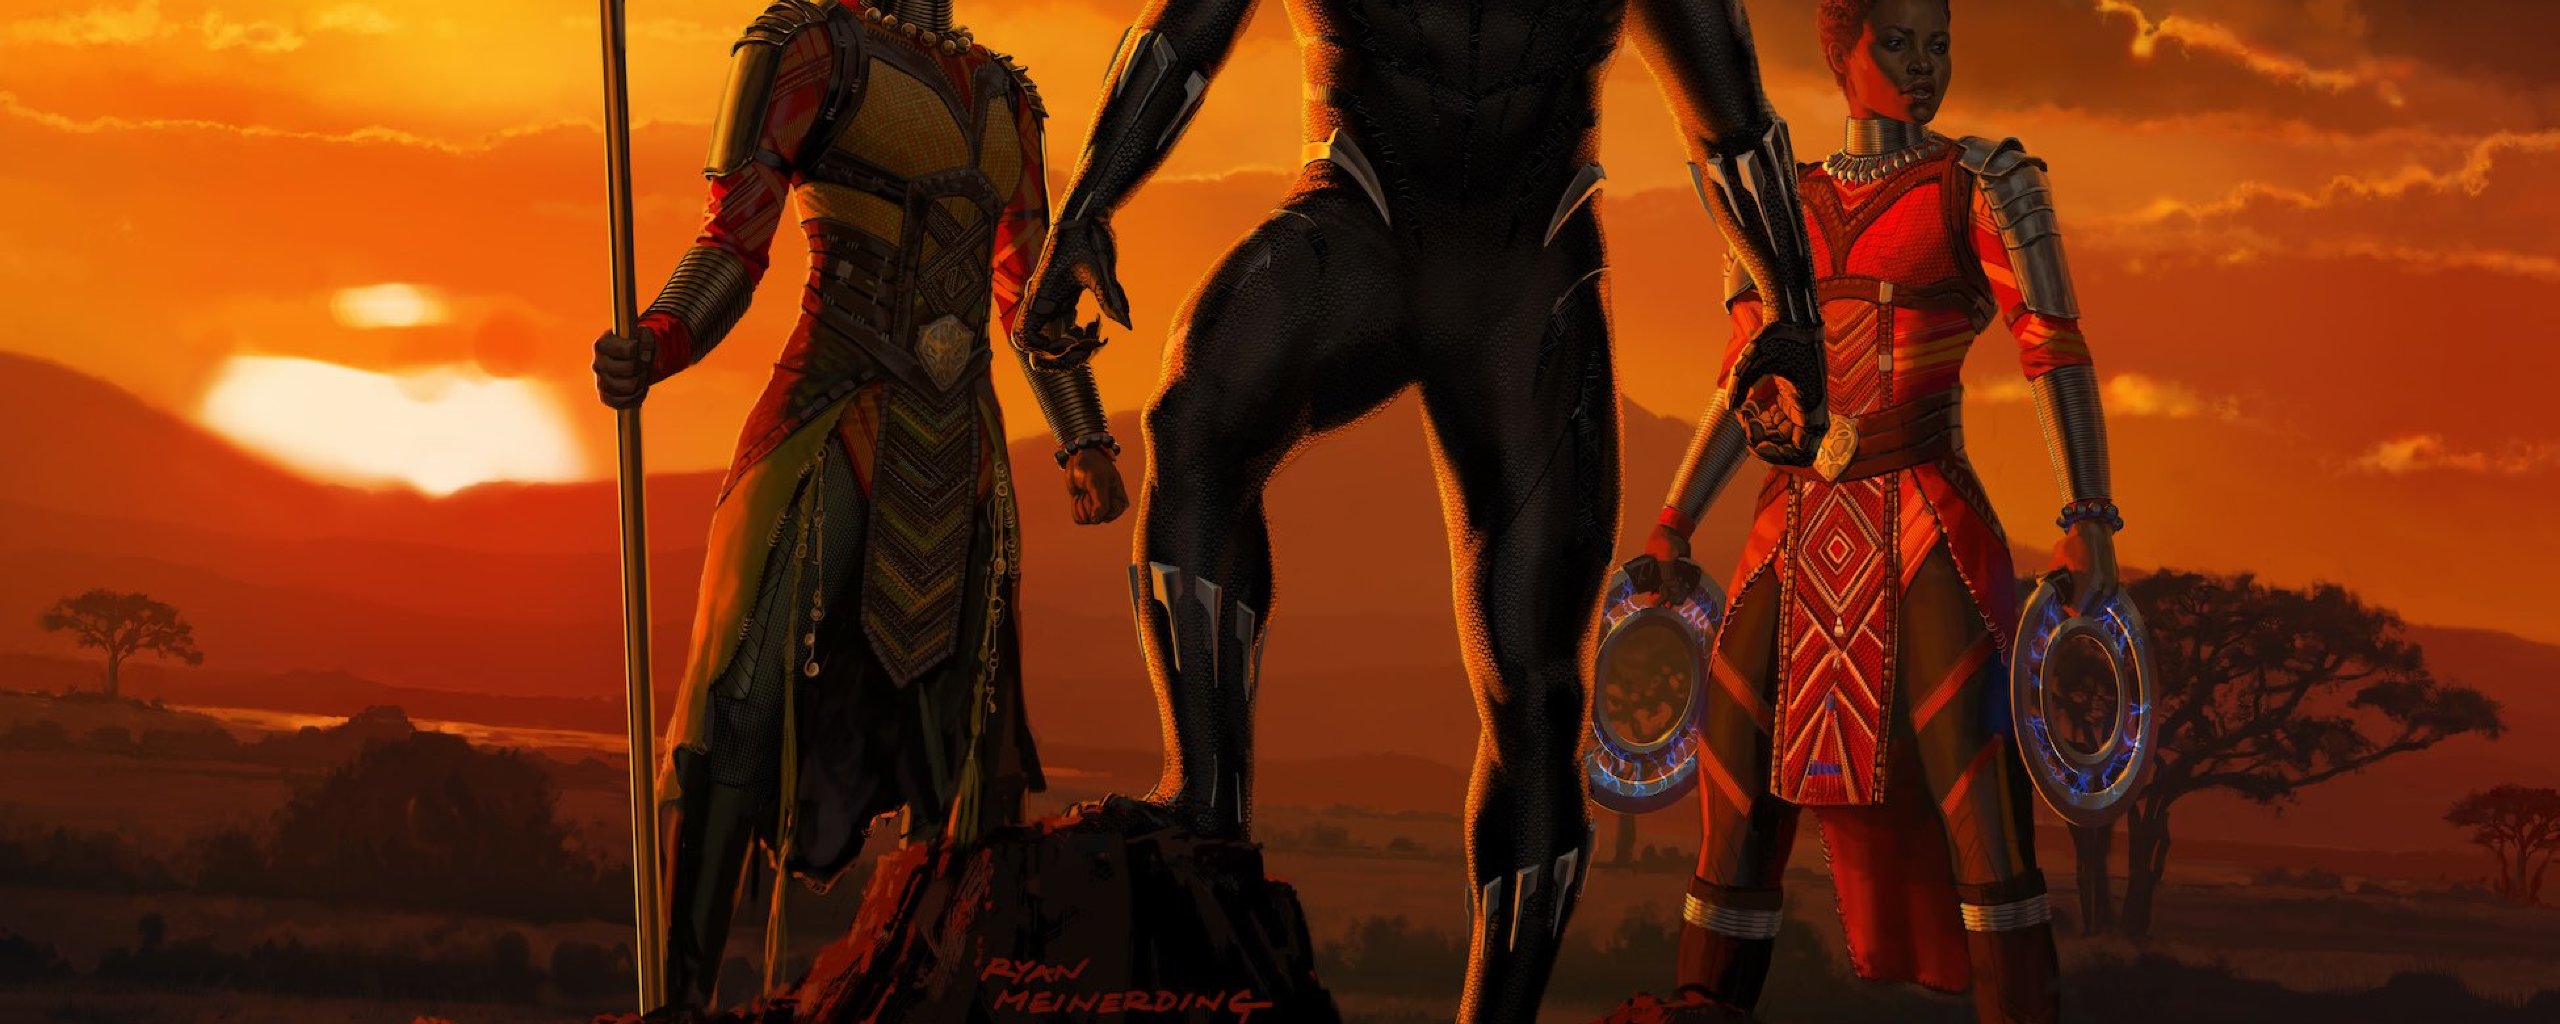 Black Panther Movie Artwork Full HD Wallpaper